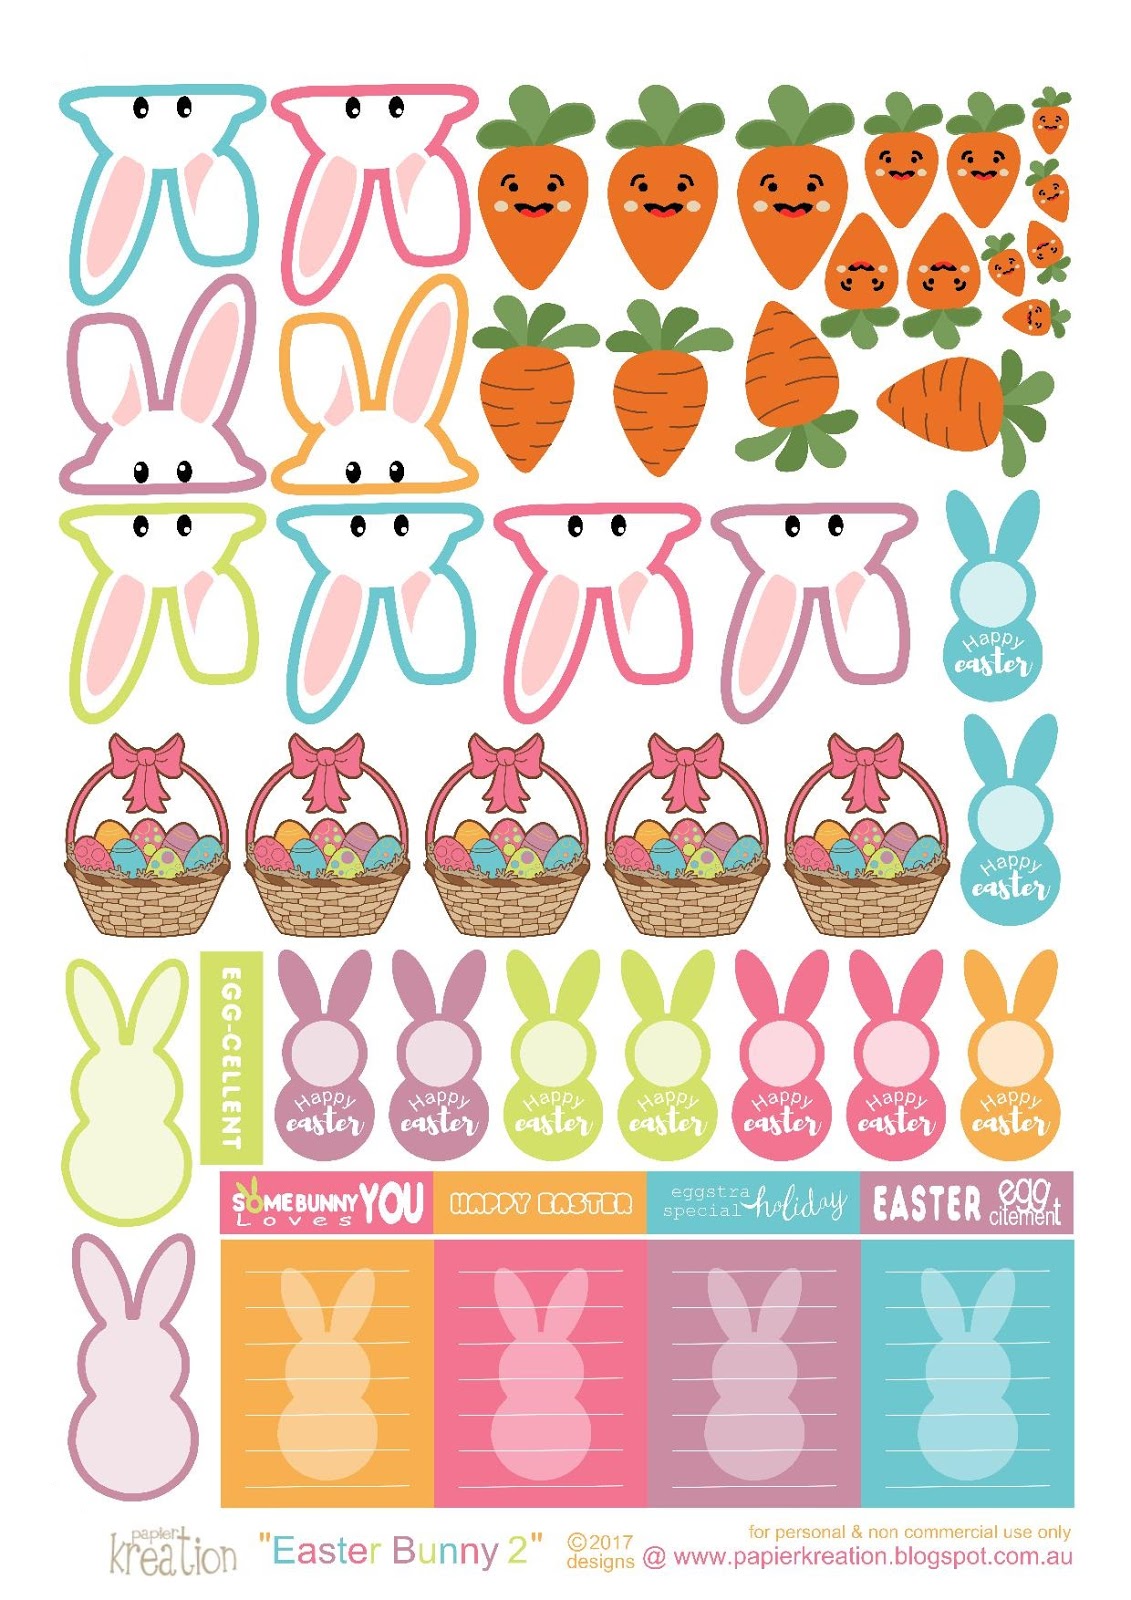 papier kreation: Easter Bunny Printables Planner Sticker Part 2